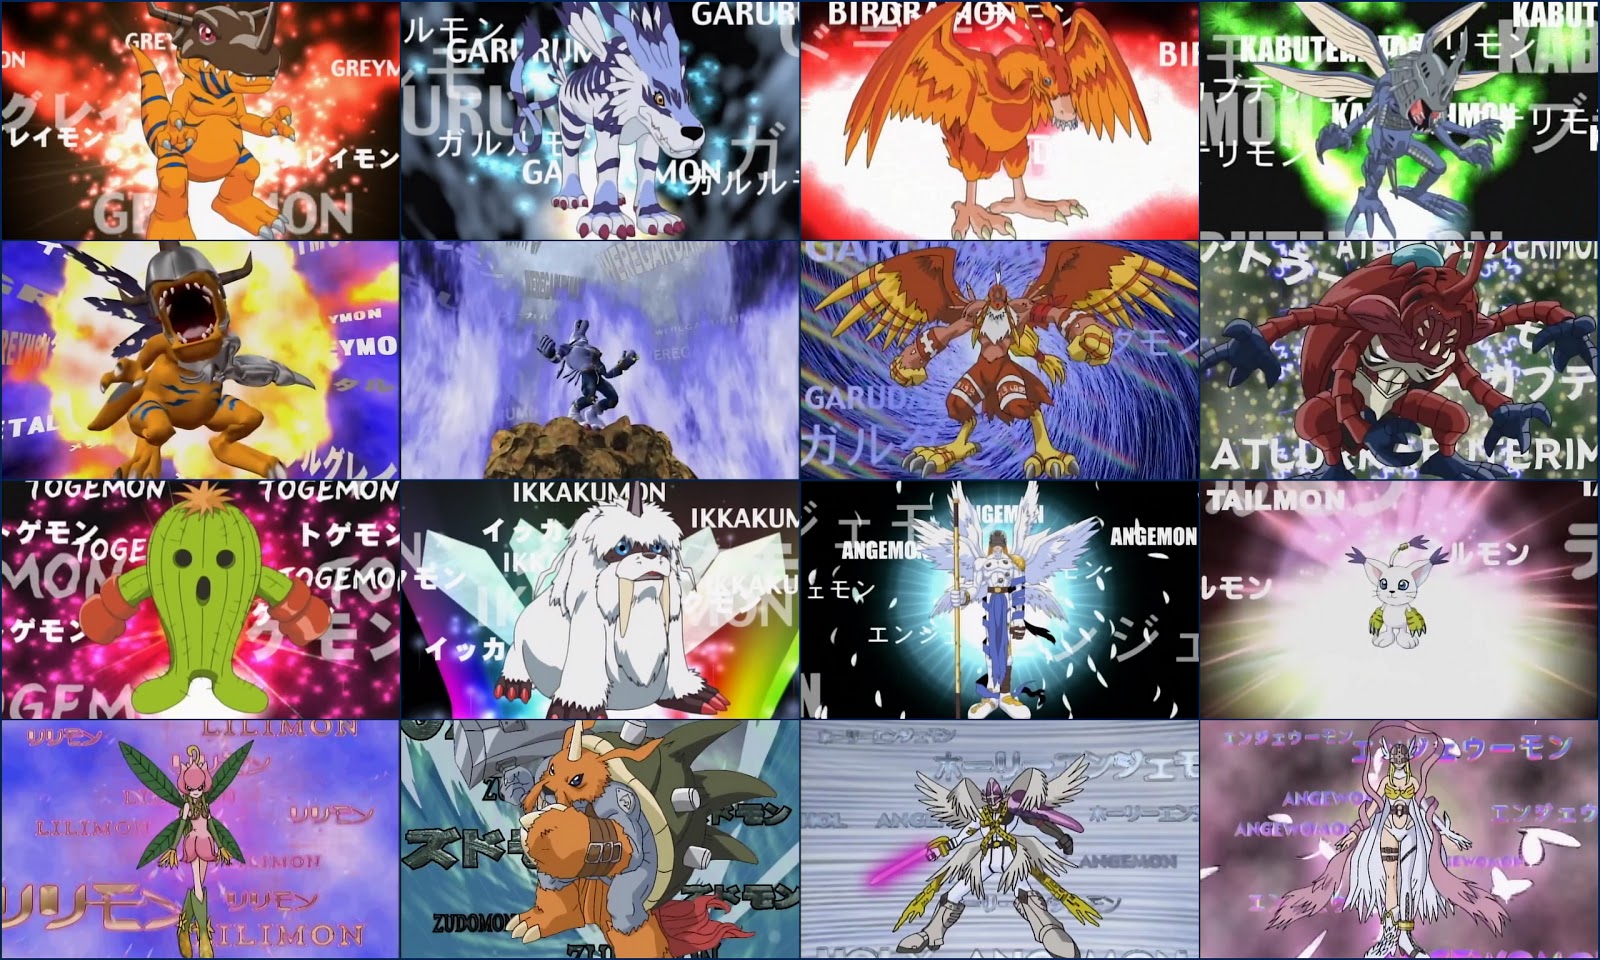 Anime Digimon Adventure Episode Media2give